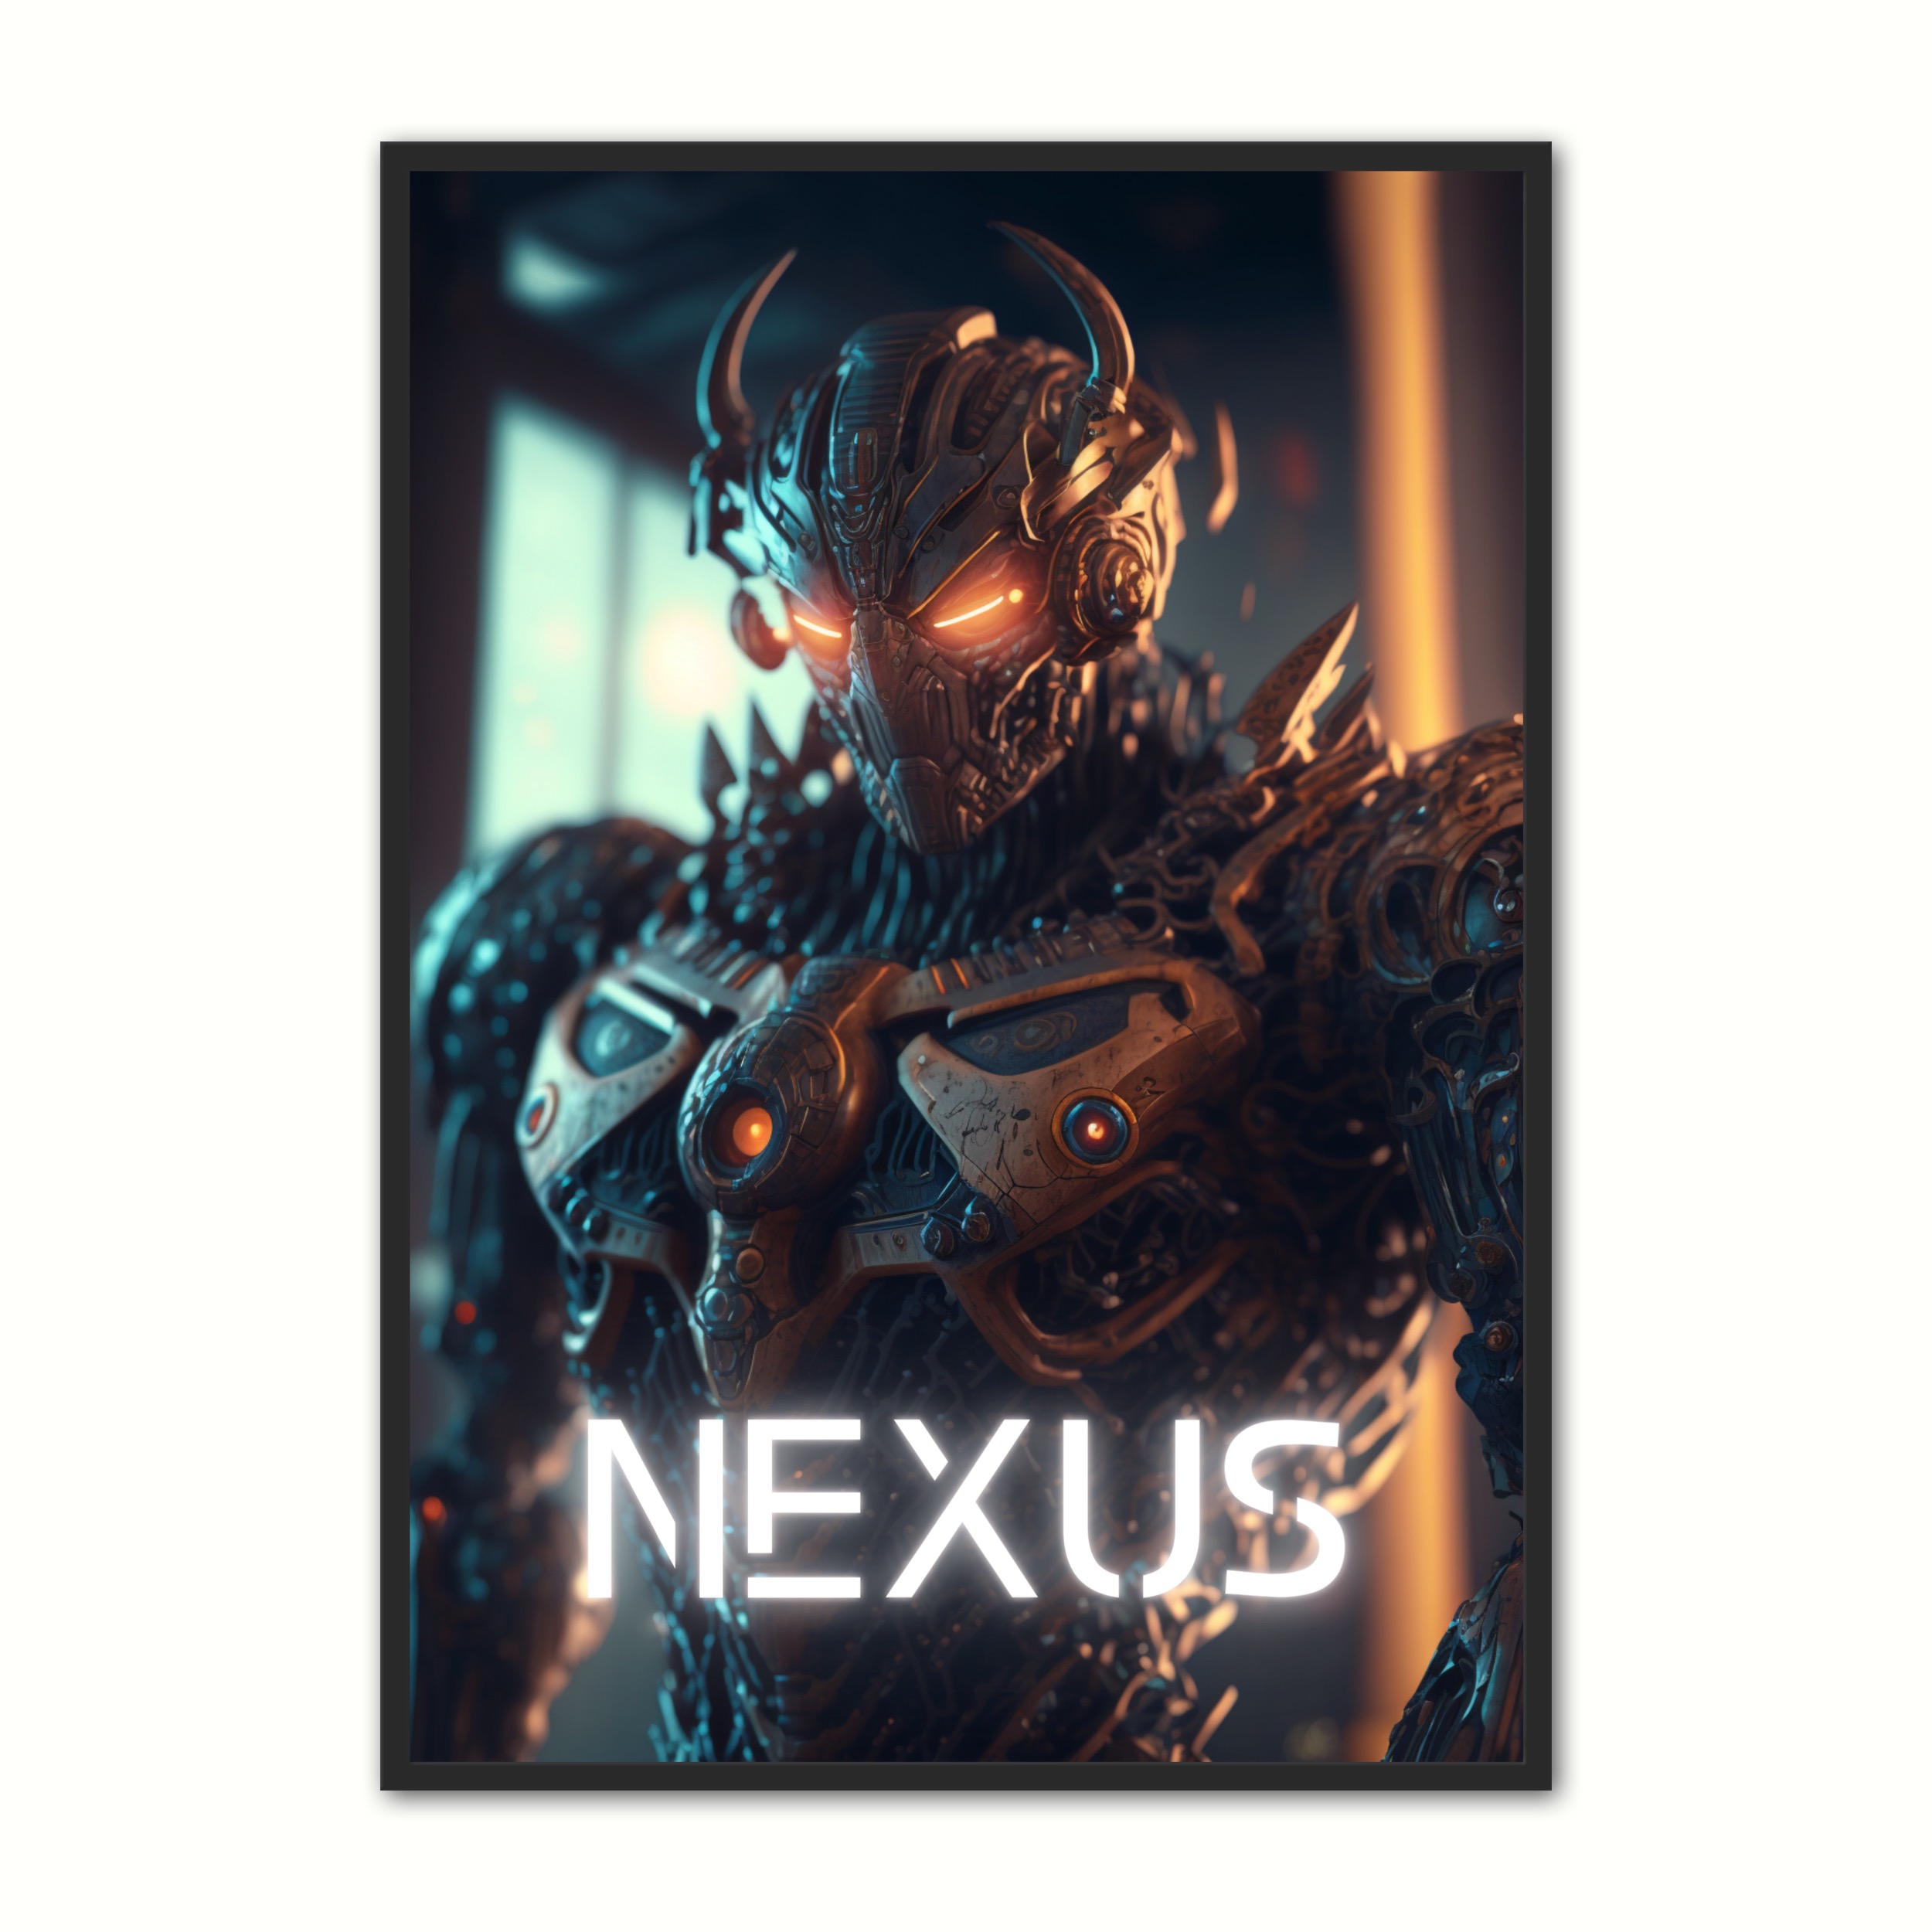 Se Plakat med Nexus - Android 30 x 40 cm hos Nyplakat.dk